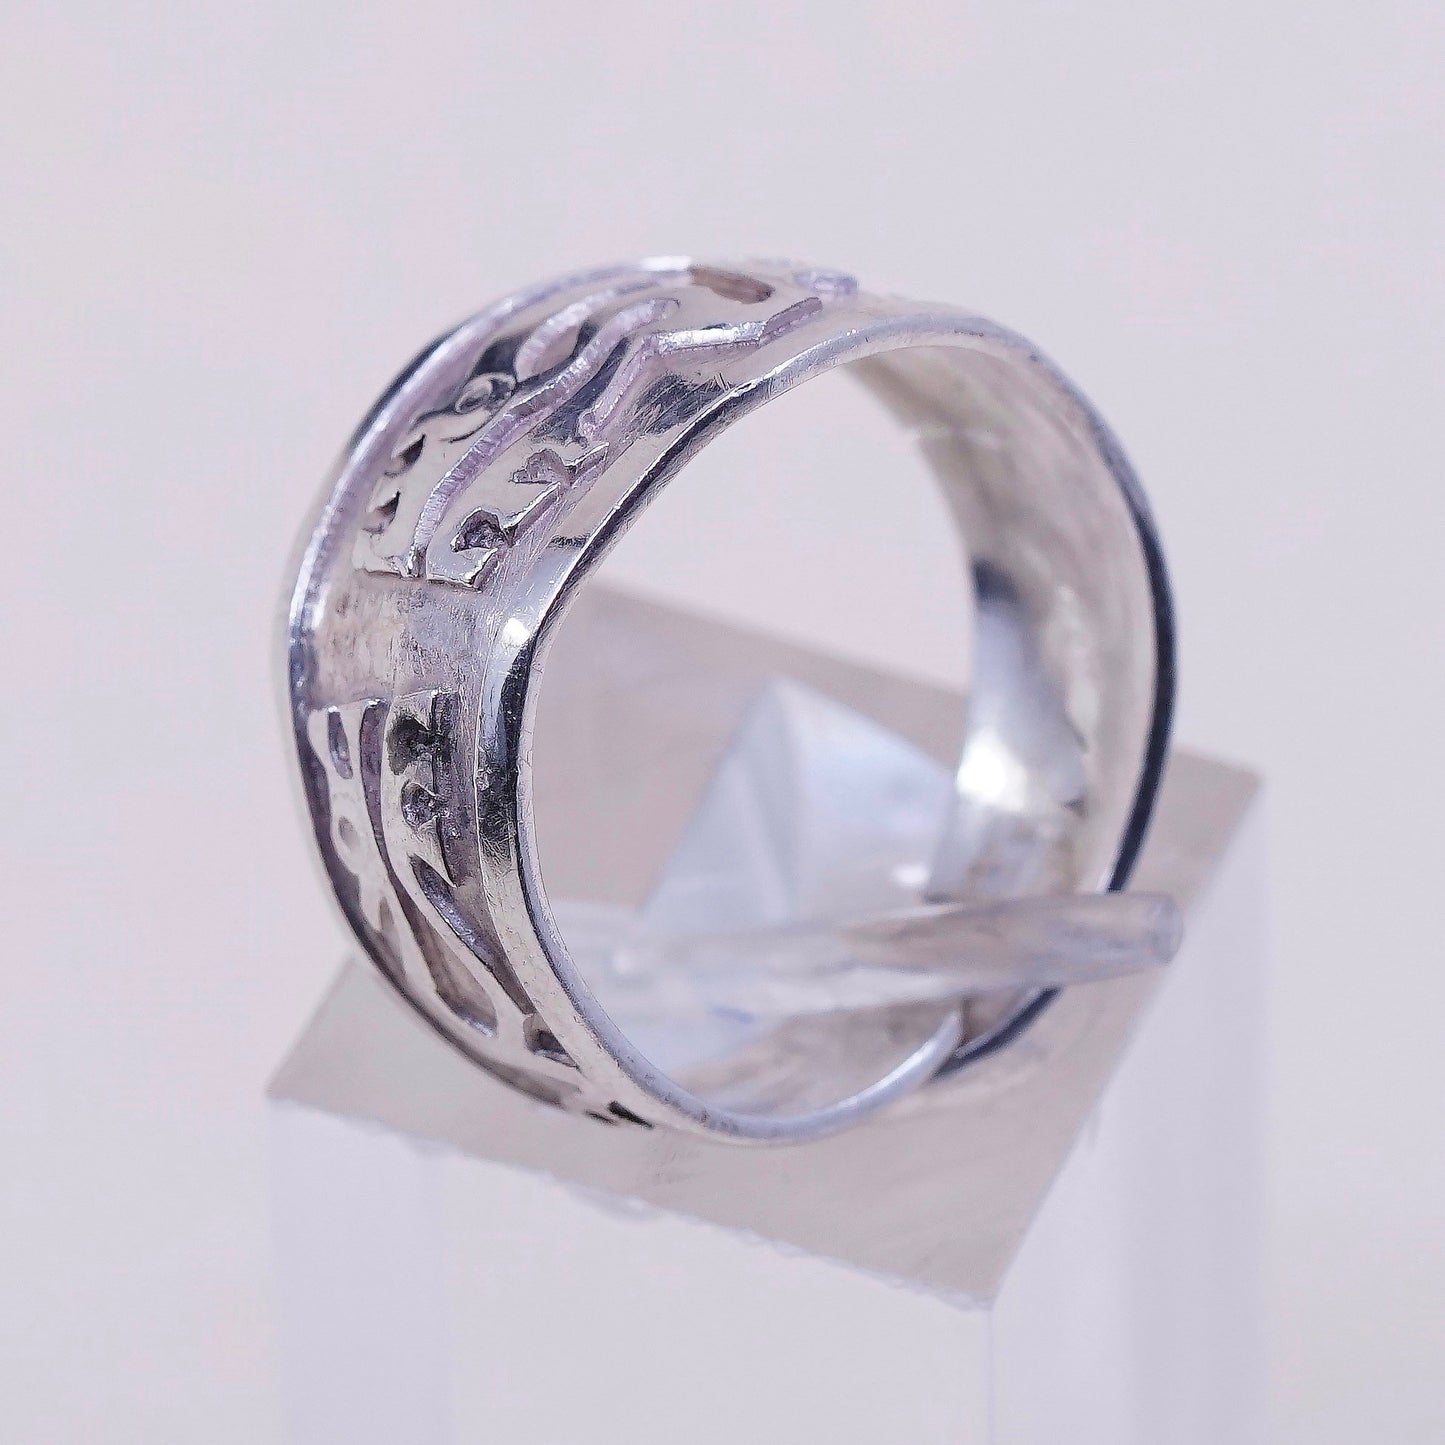 sz 7, vtg Sterling silver handmade ring, 925 band w/ pattern